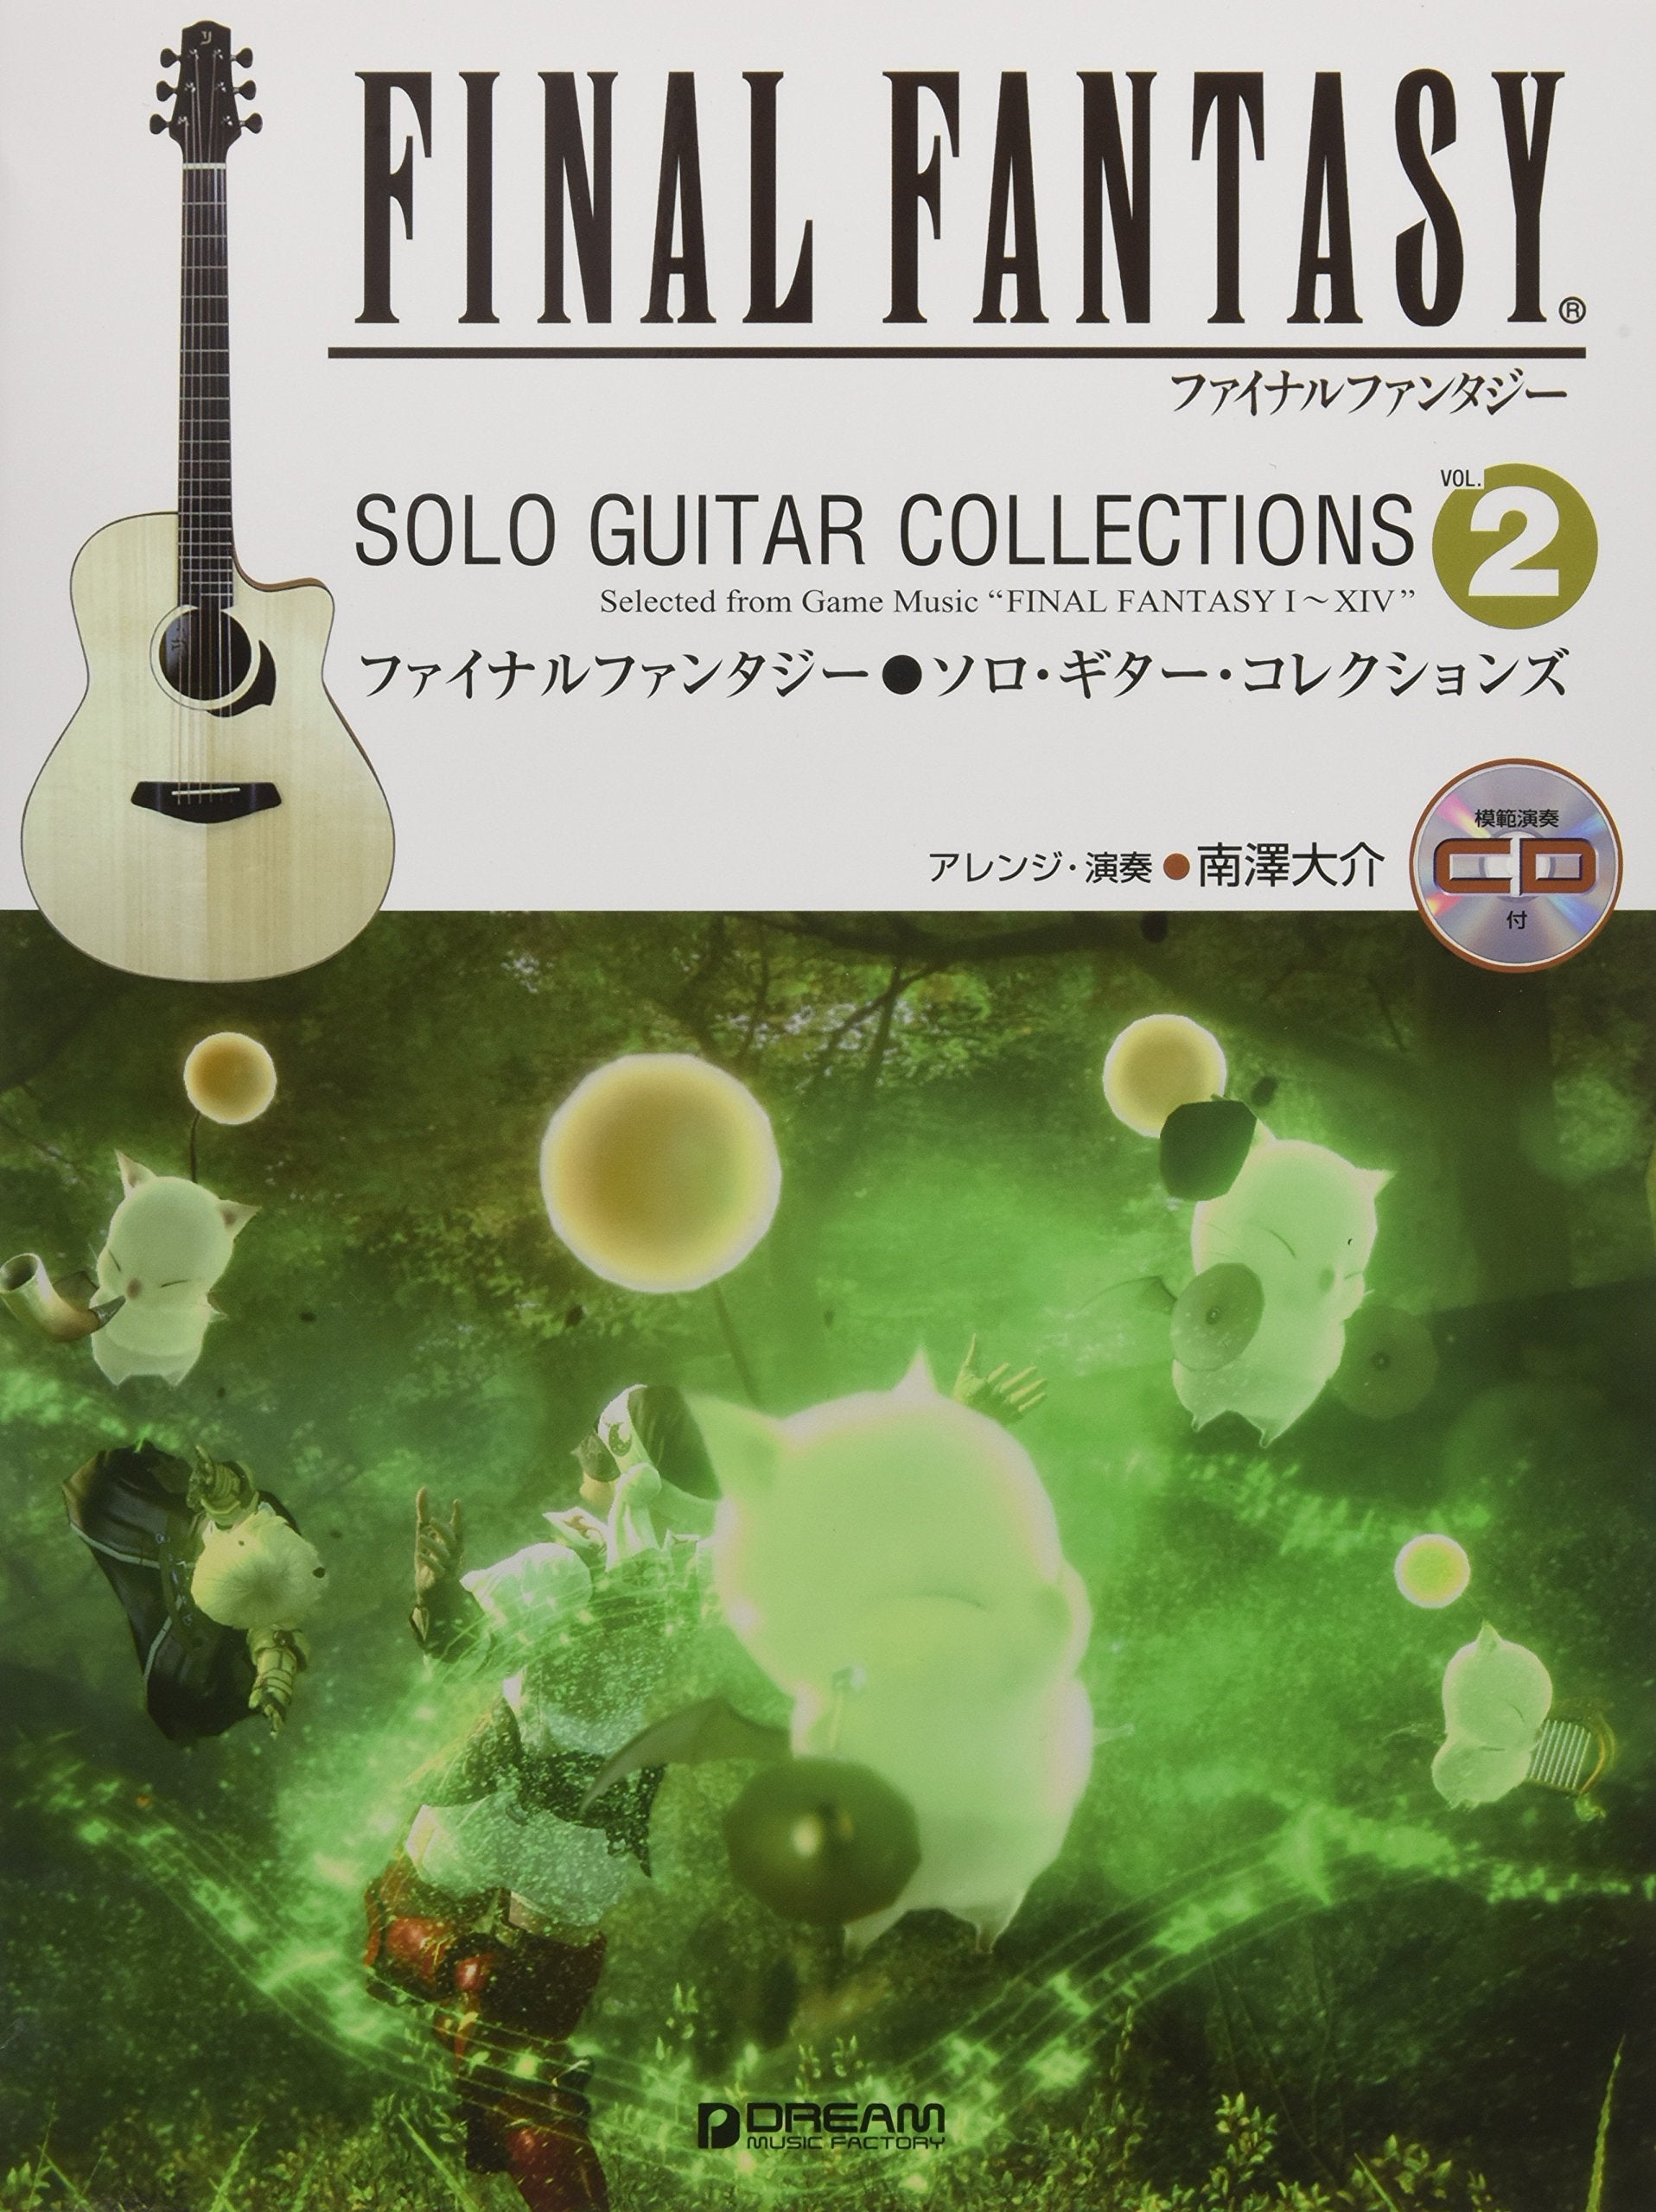 Final Fantasy: Solo Guitar Collections Vol. 2